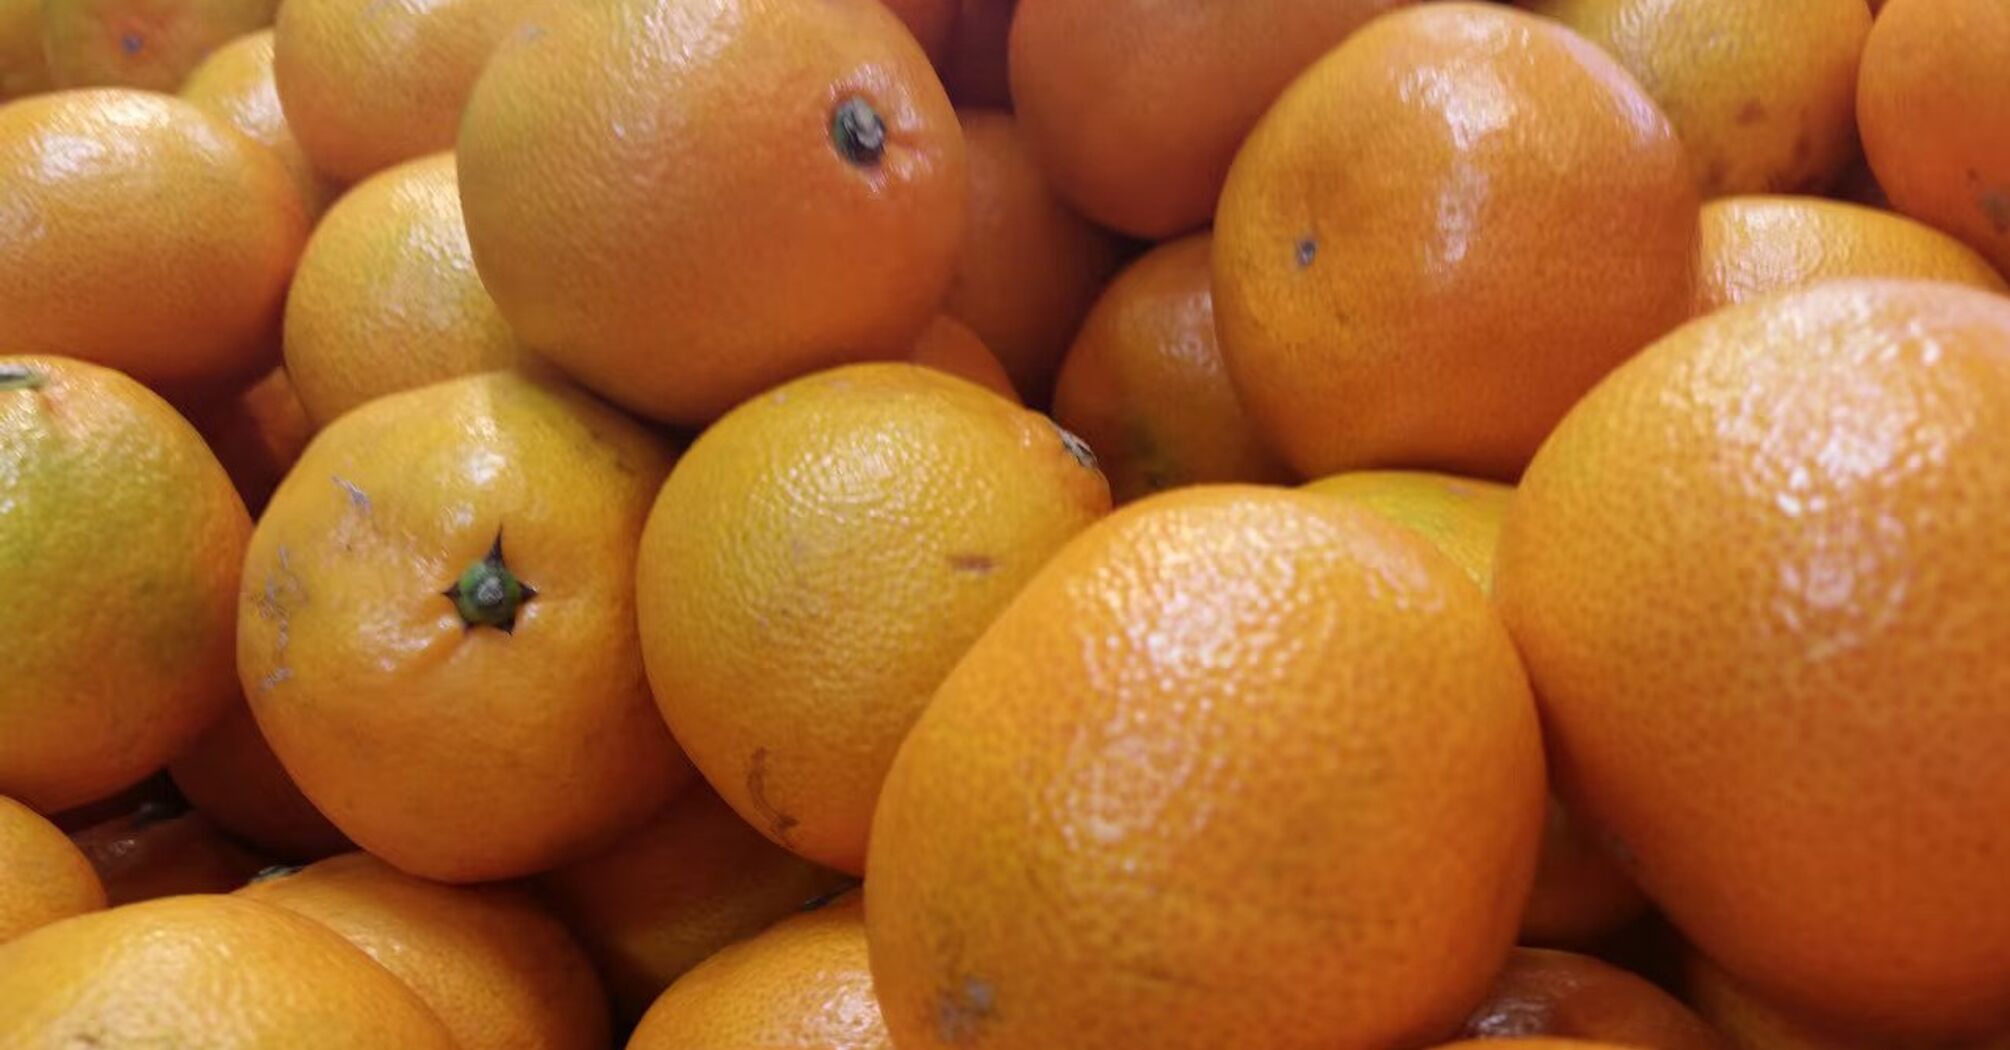 How to avoid buying tasteless oranges